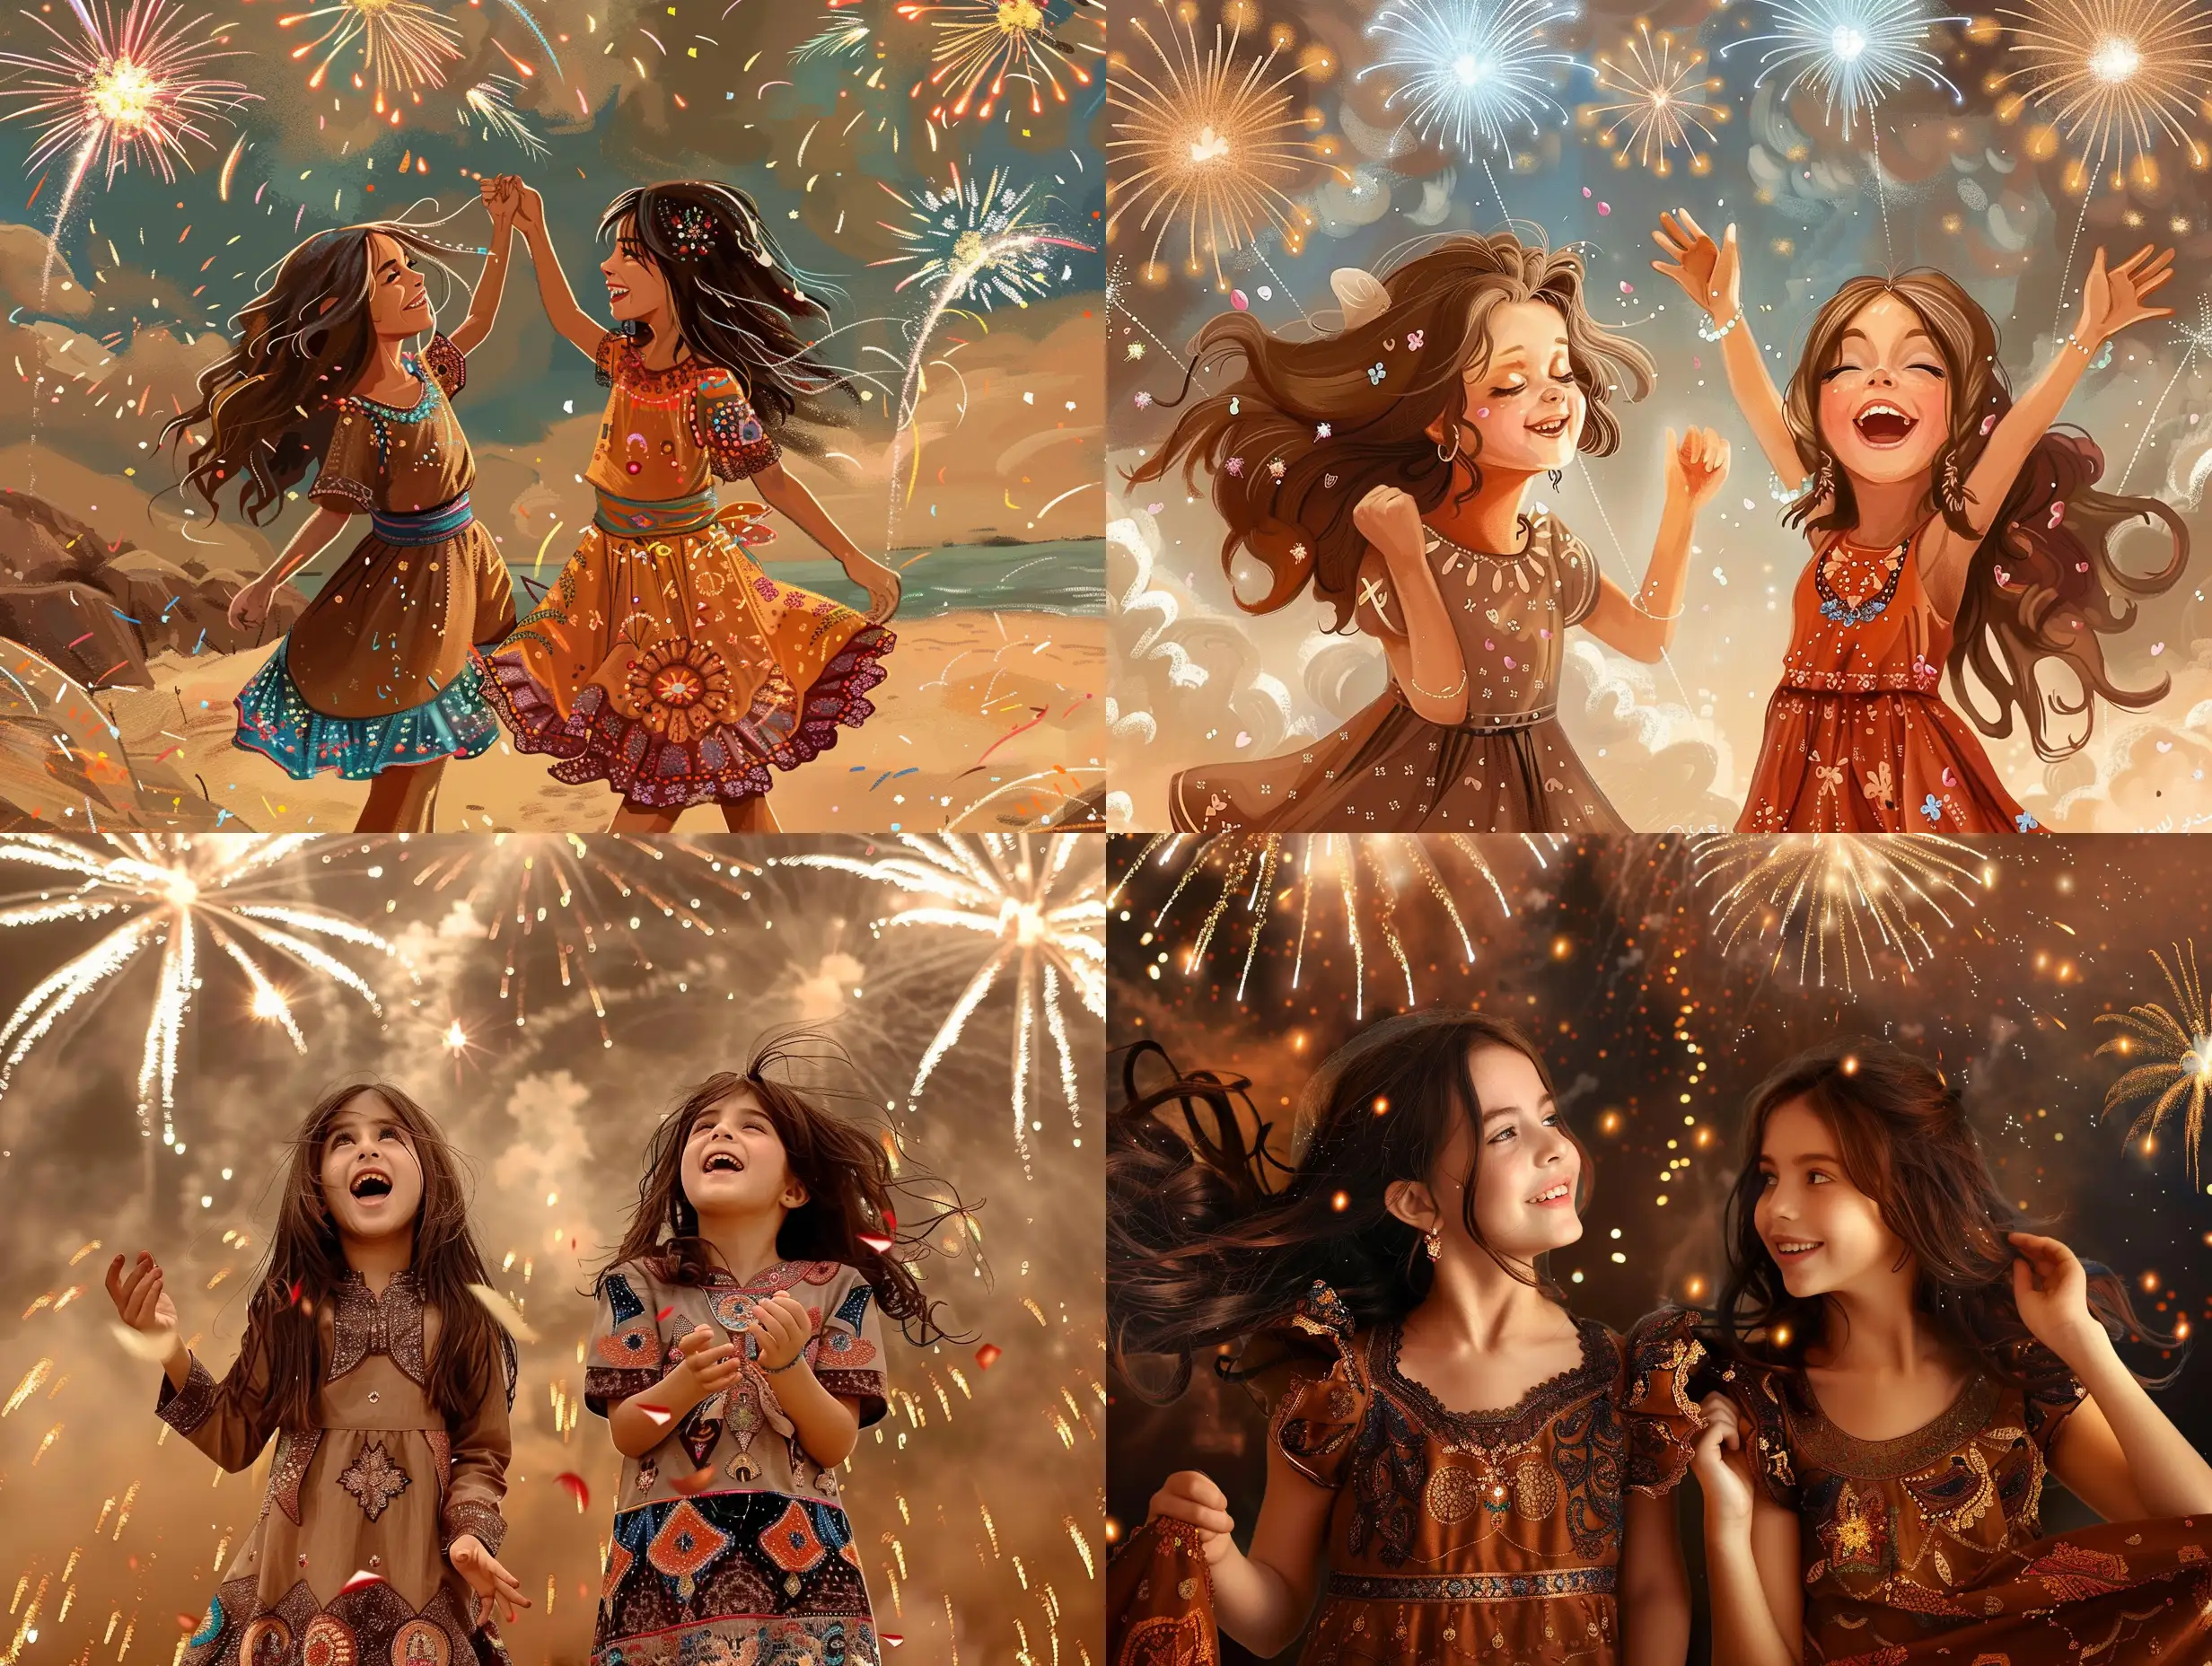 Eid-Celebration-Joyful-Girls-in-Vibrant-Dresses-Under-a-FireworkLit-Sky